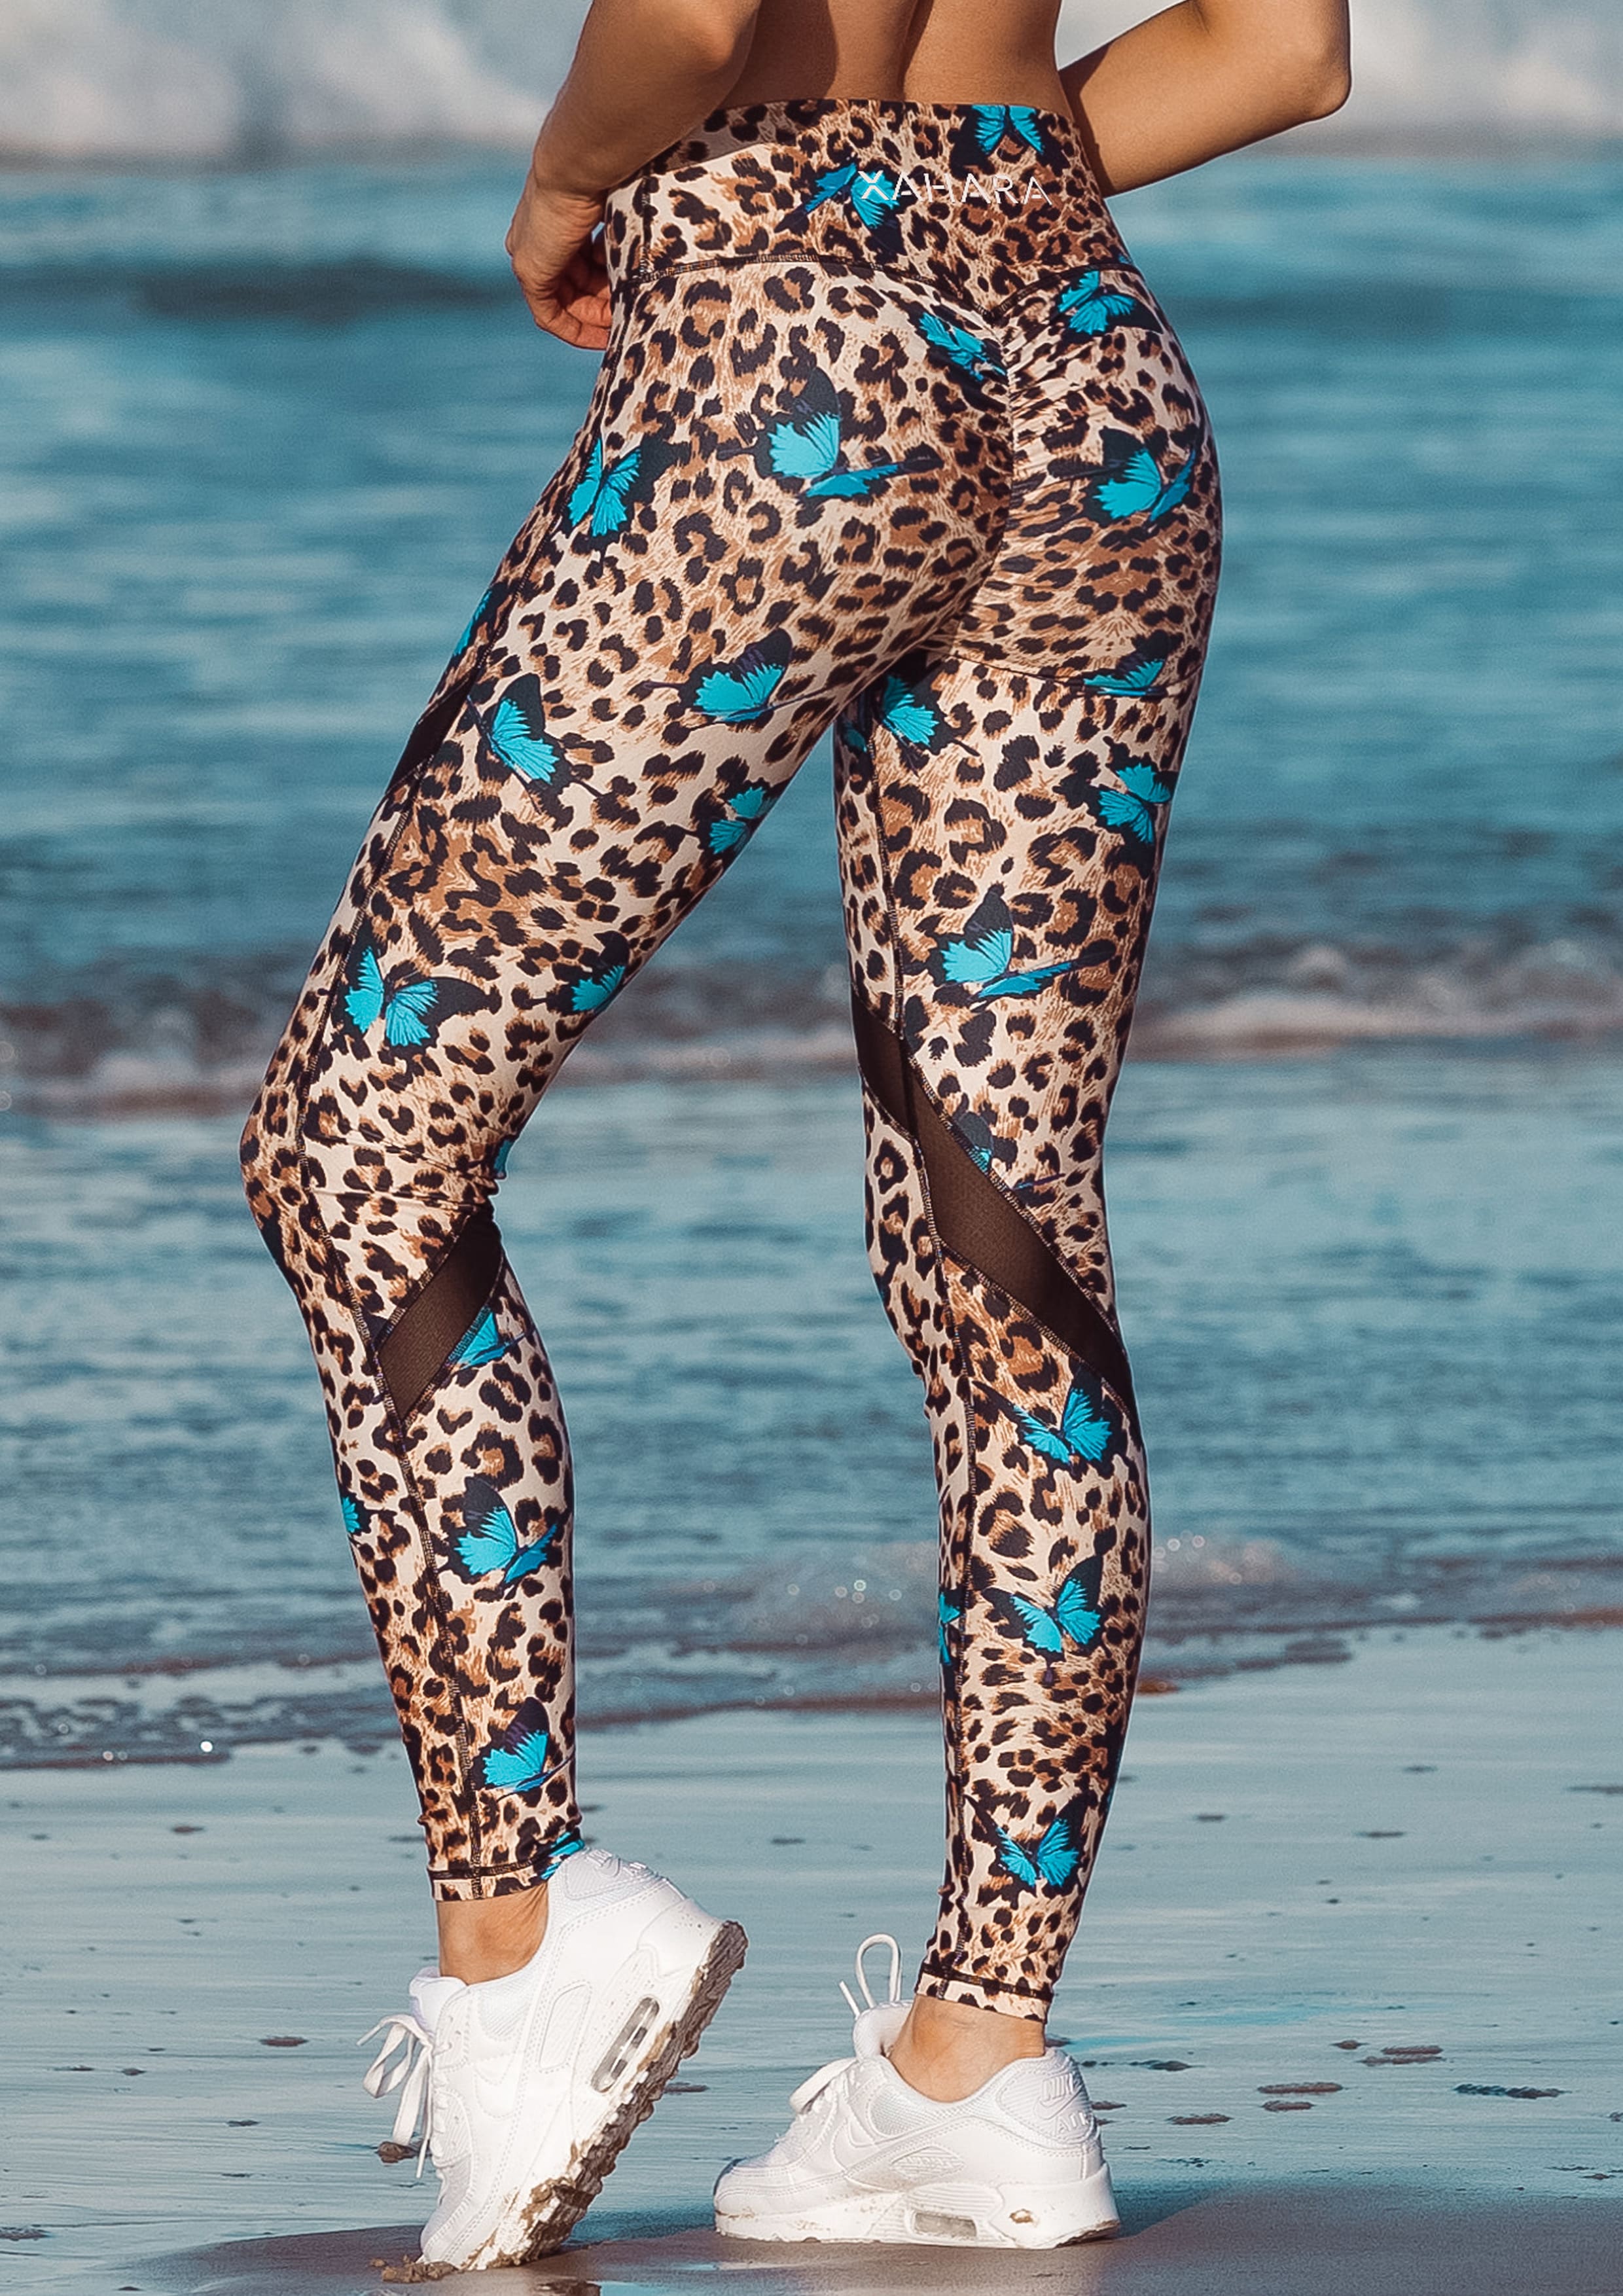 Bootylicious Butterfly Leopard Legging– Xahara Activewear